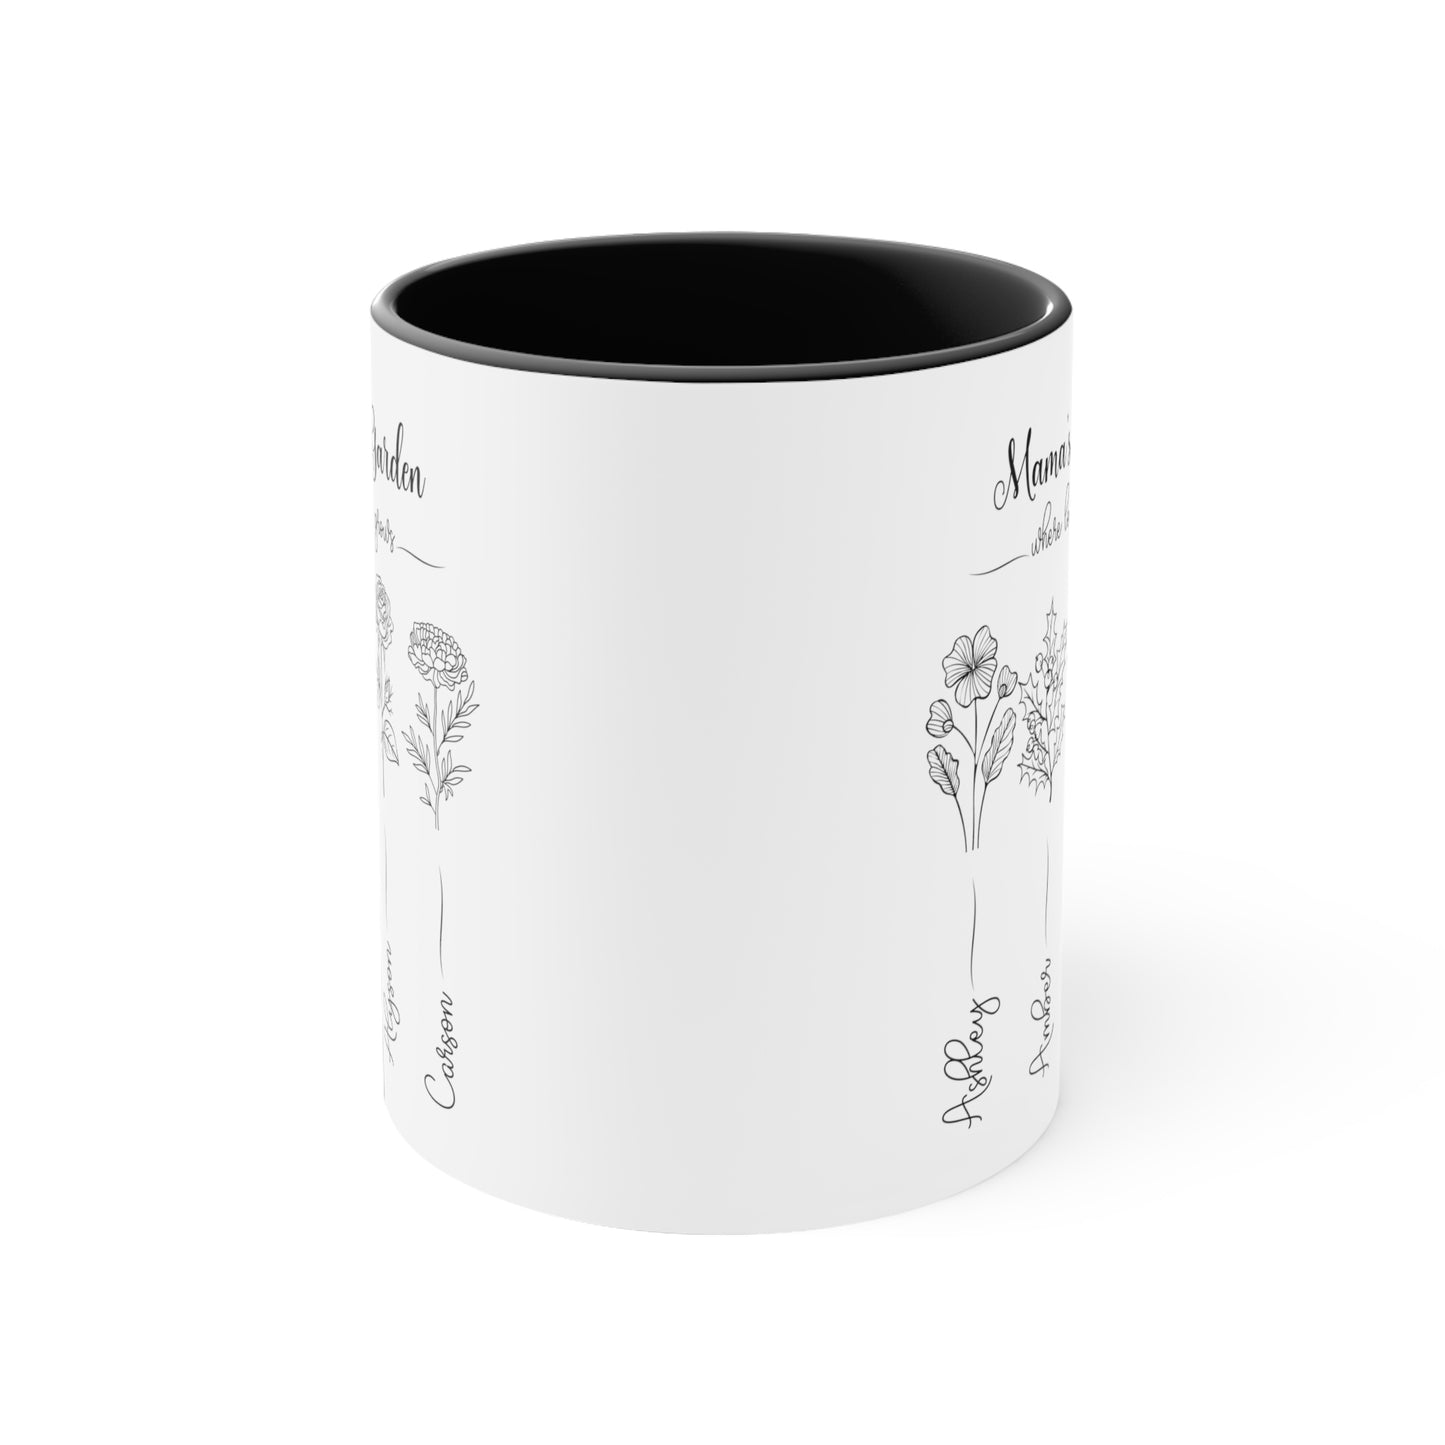 Kiesha's Garden Black and White Accent Coffee Mug, 11oz